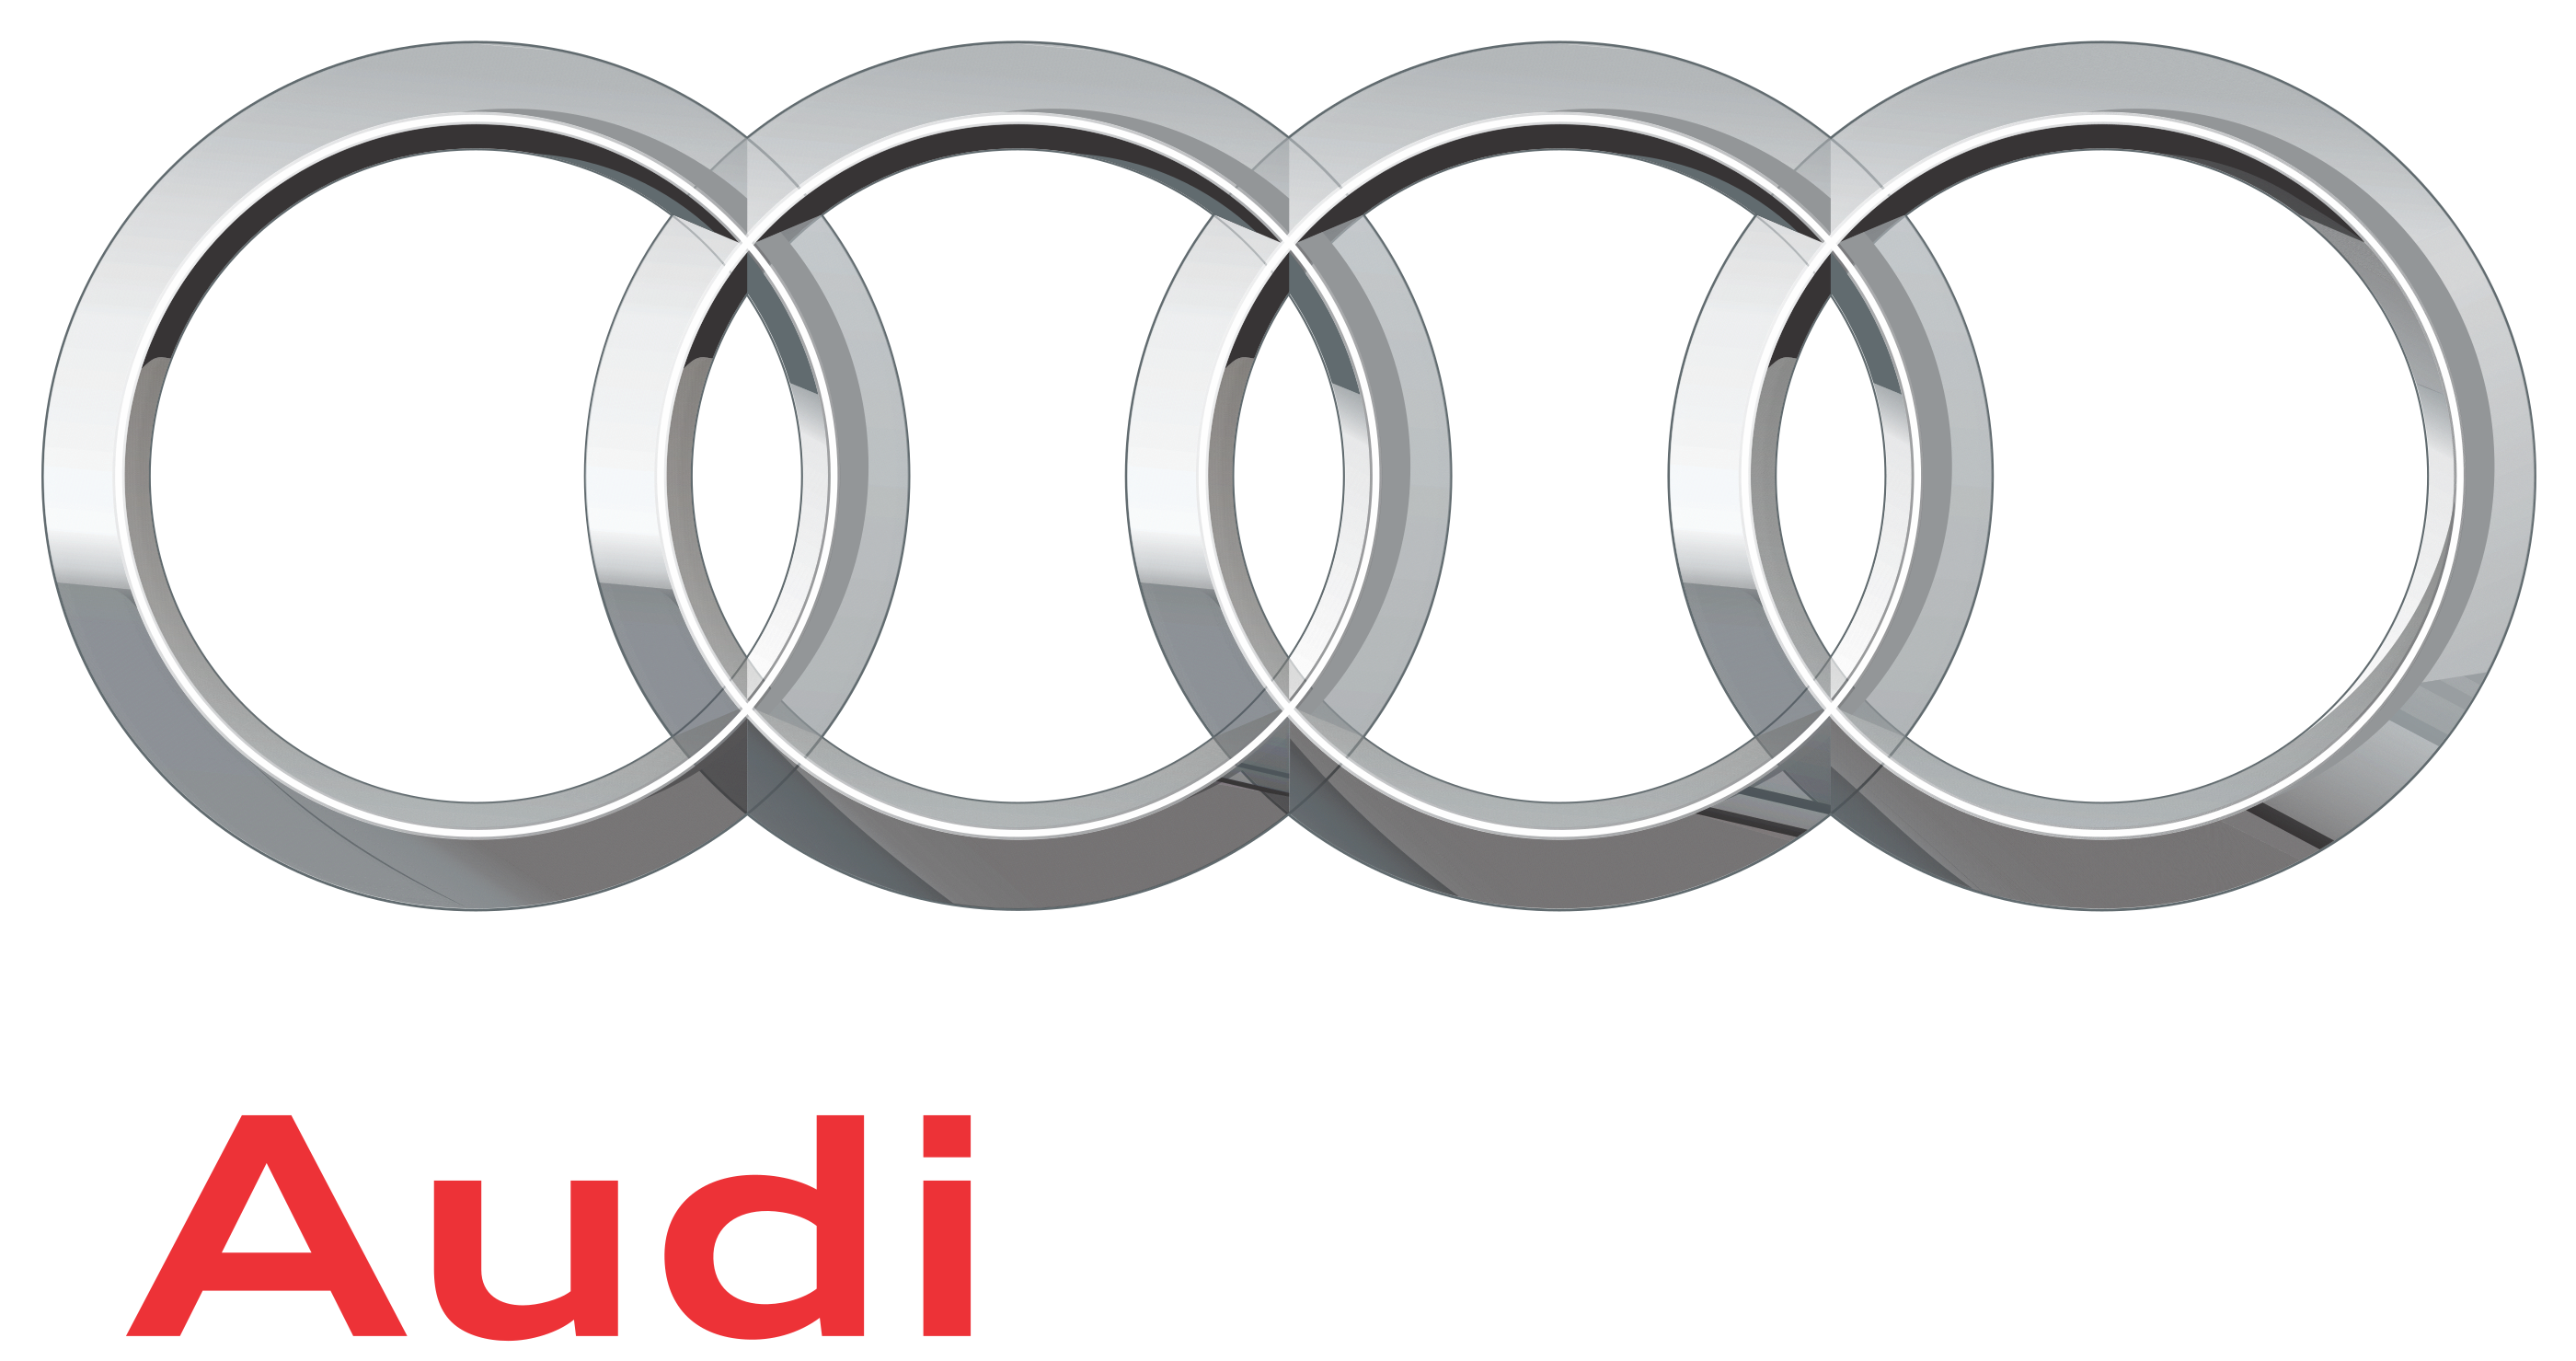 audi logo 8 - Audi Logo